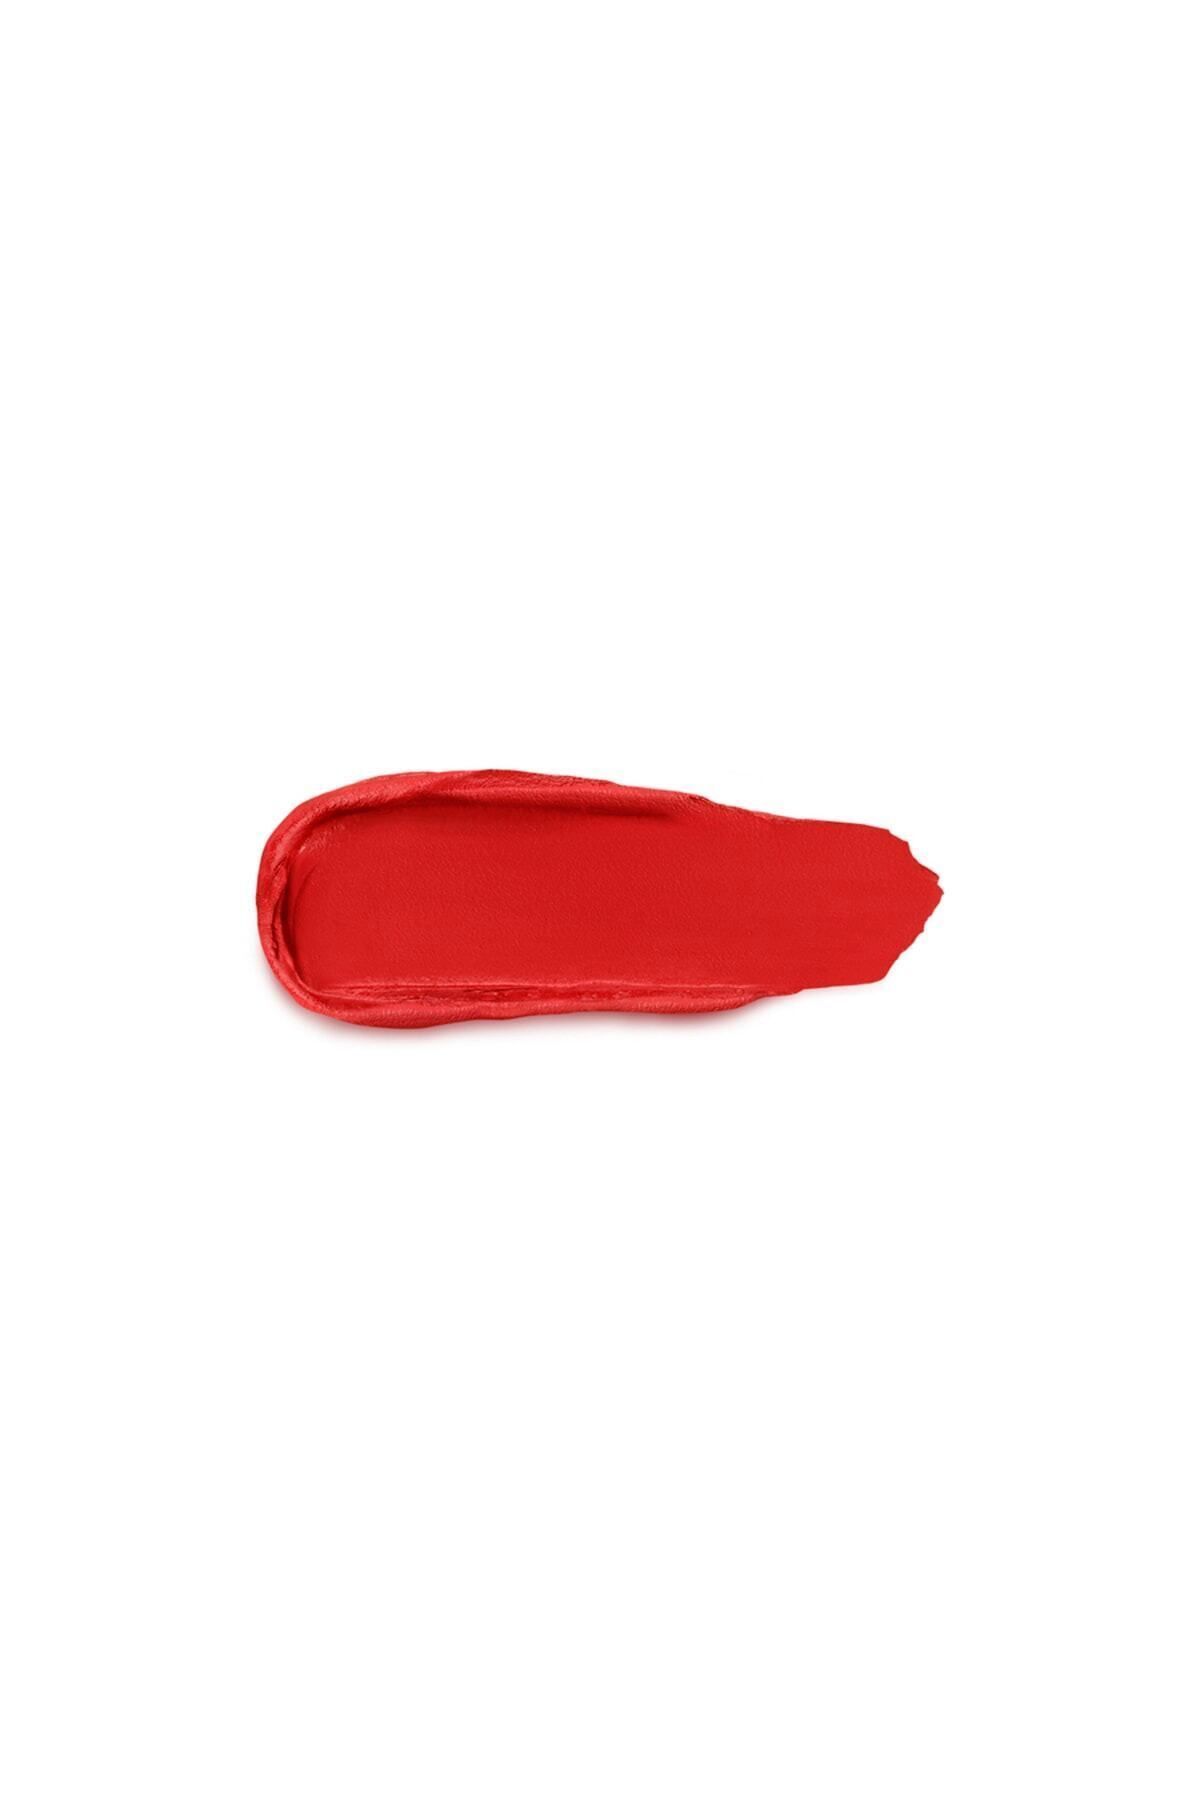 KIKO رژ لب مایع مات مرطوب کننده دائمی نو 11 رنگ قرمز کلاسیک